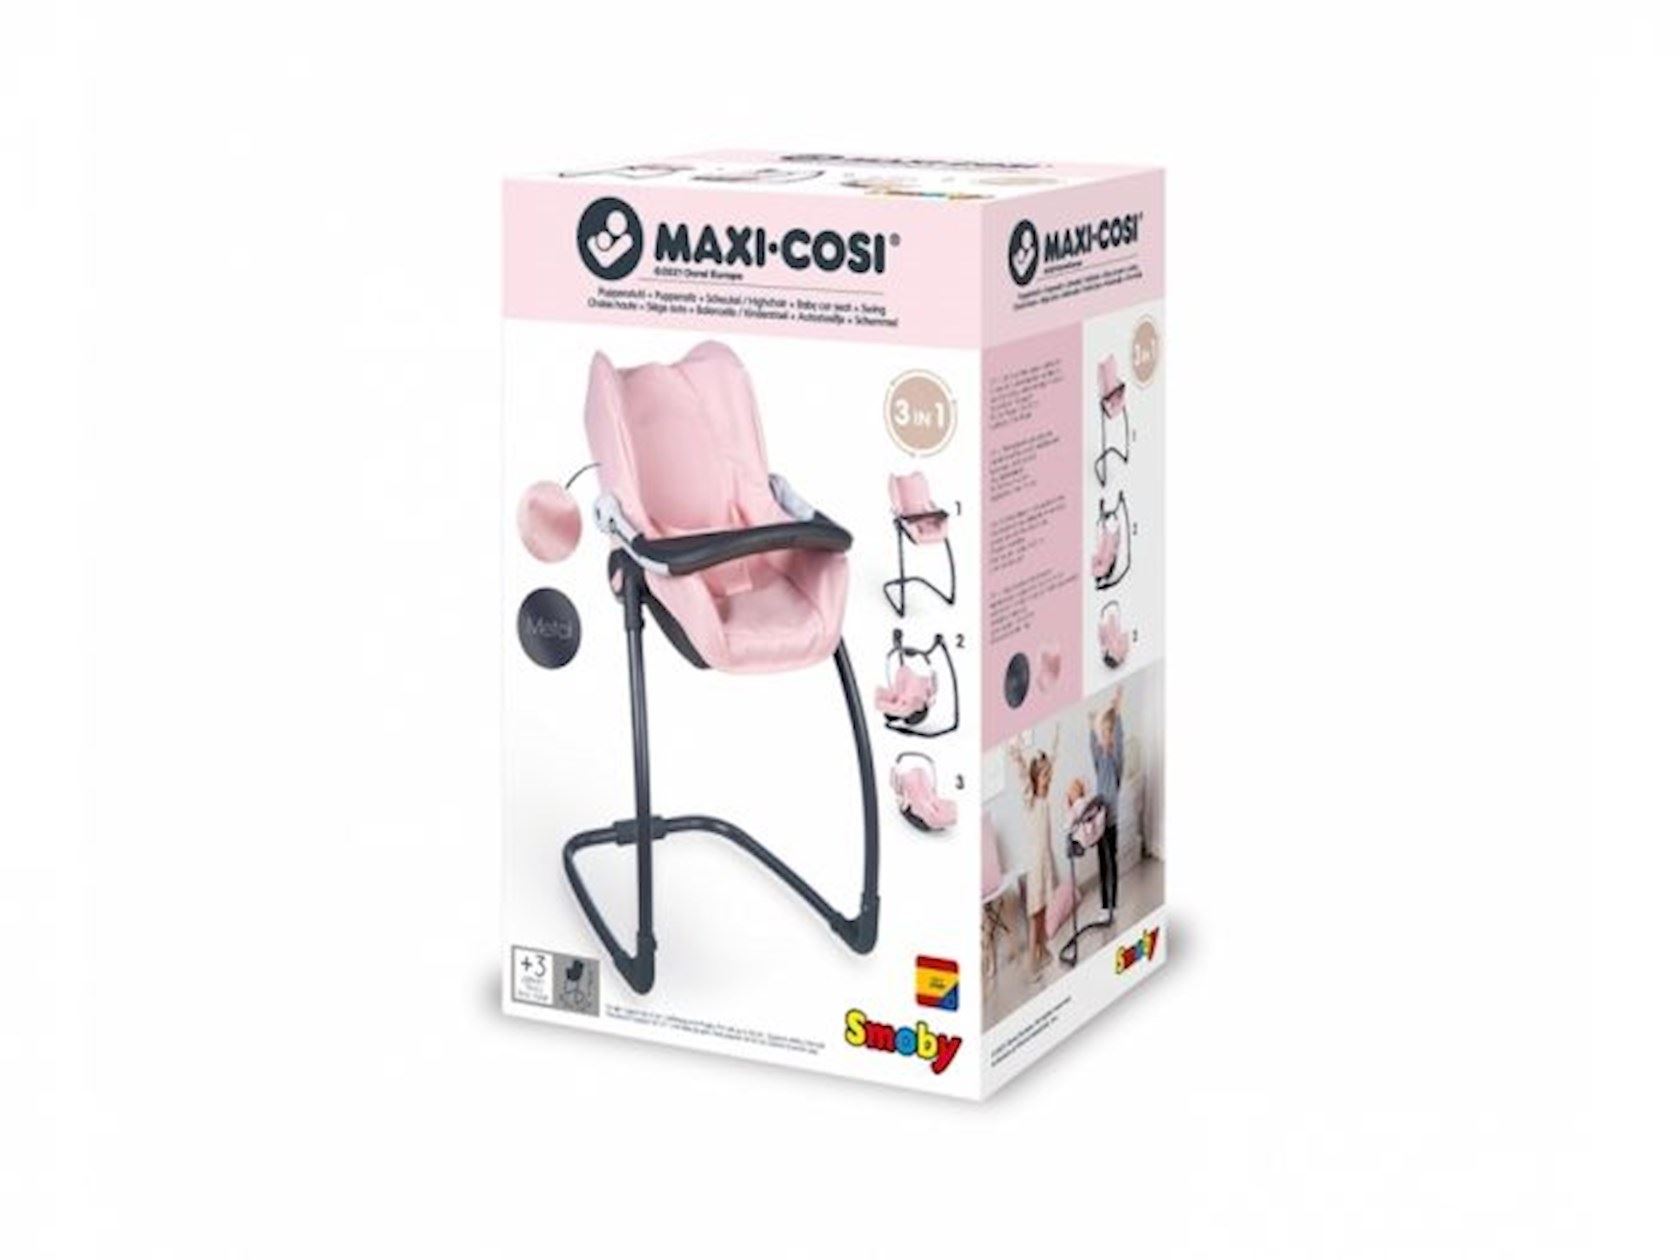 Smoby-Maxi-Cosi-kids-autostoel-hoge-eetstoel-roze